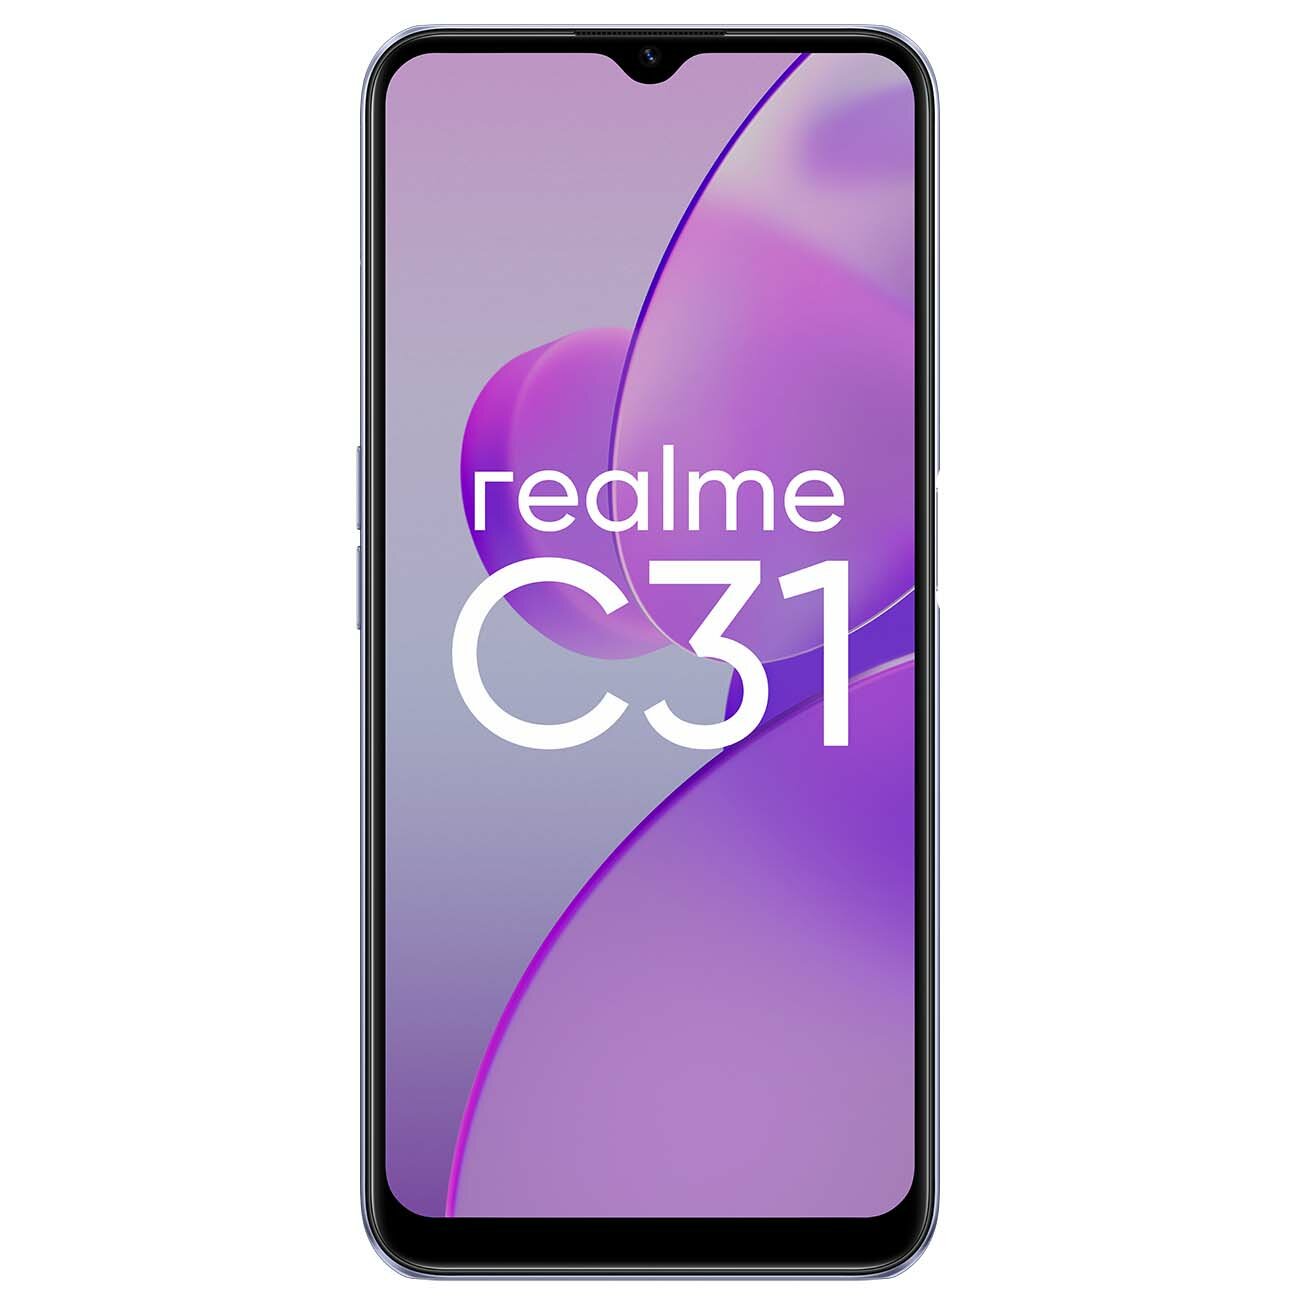 Смартфон realme C31 4/64 Light Silver (RMX3501)